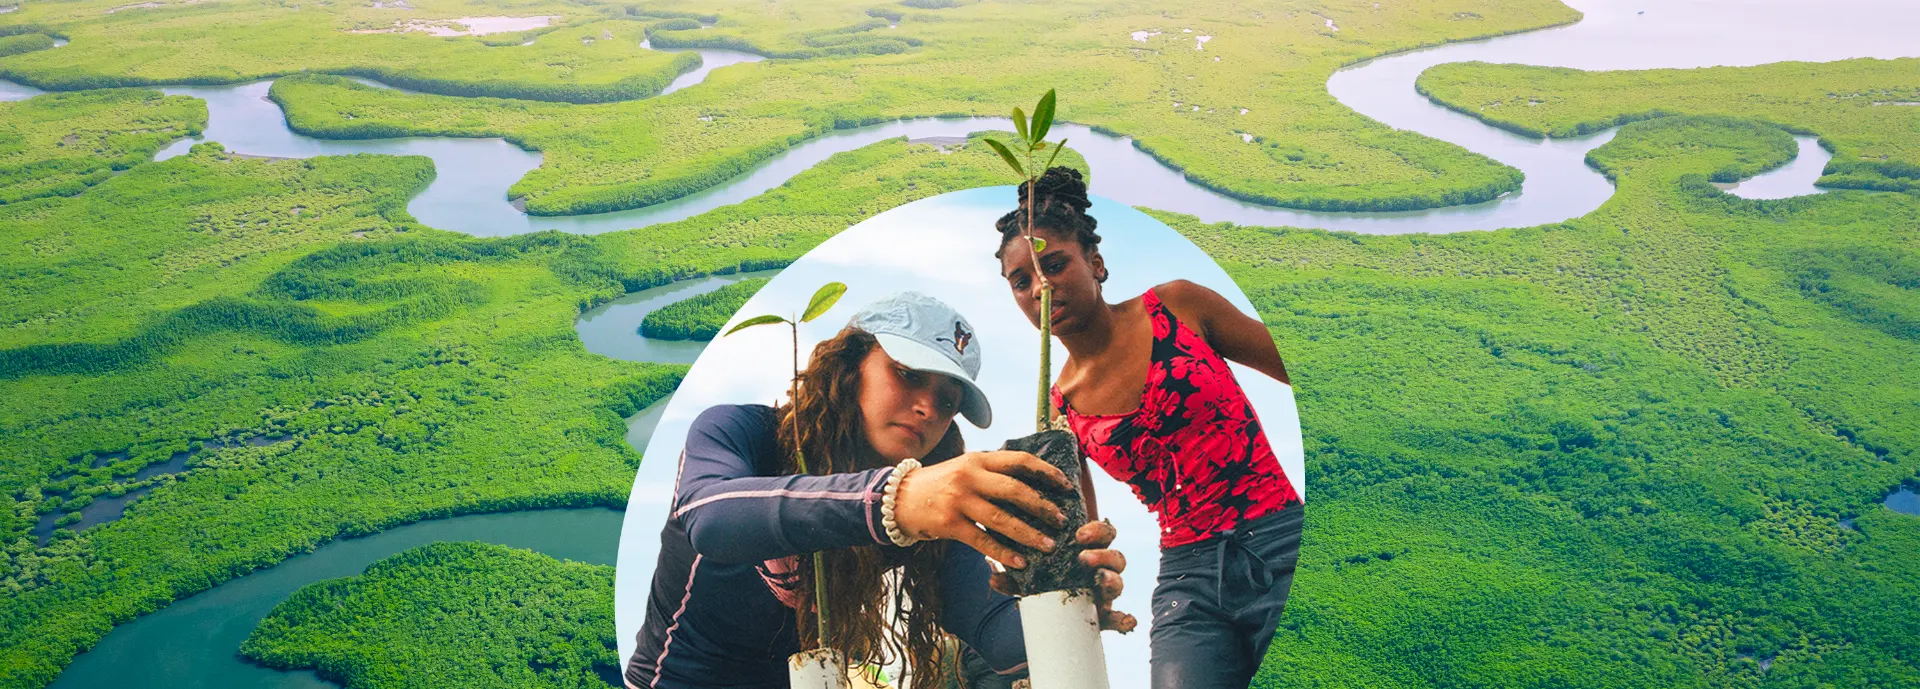 two responsible travelers planting mangroves